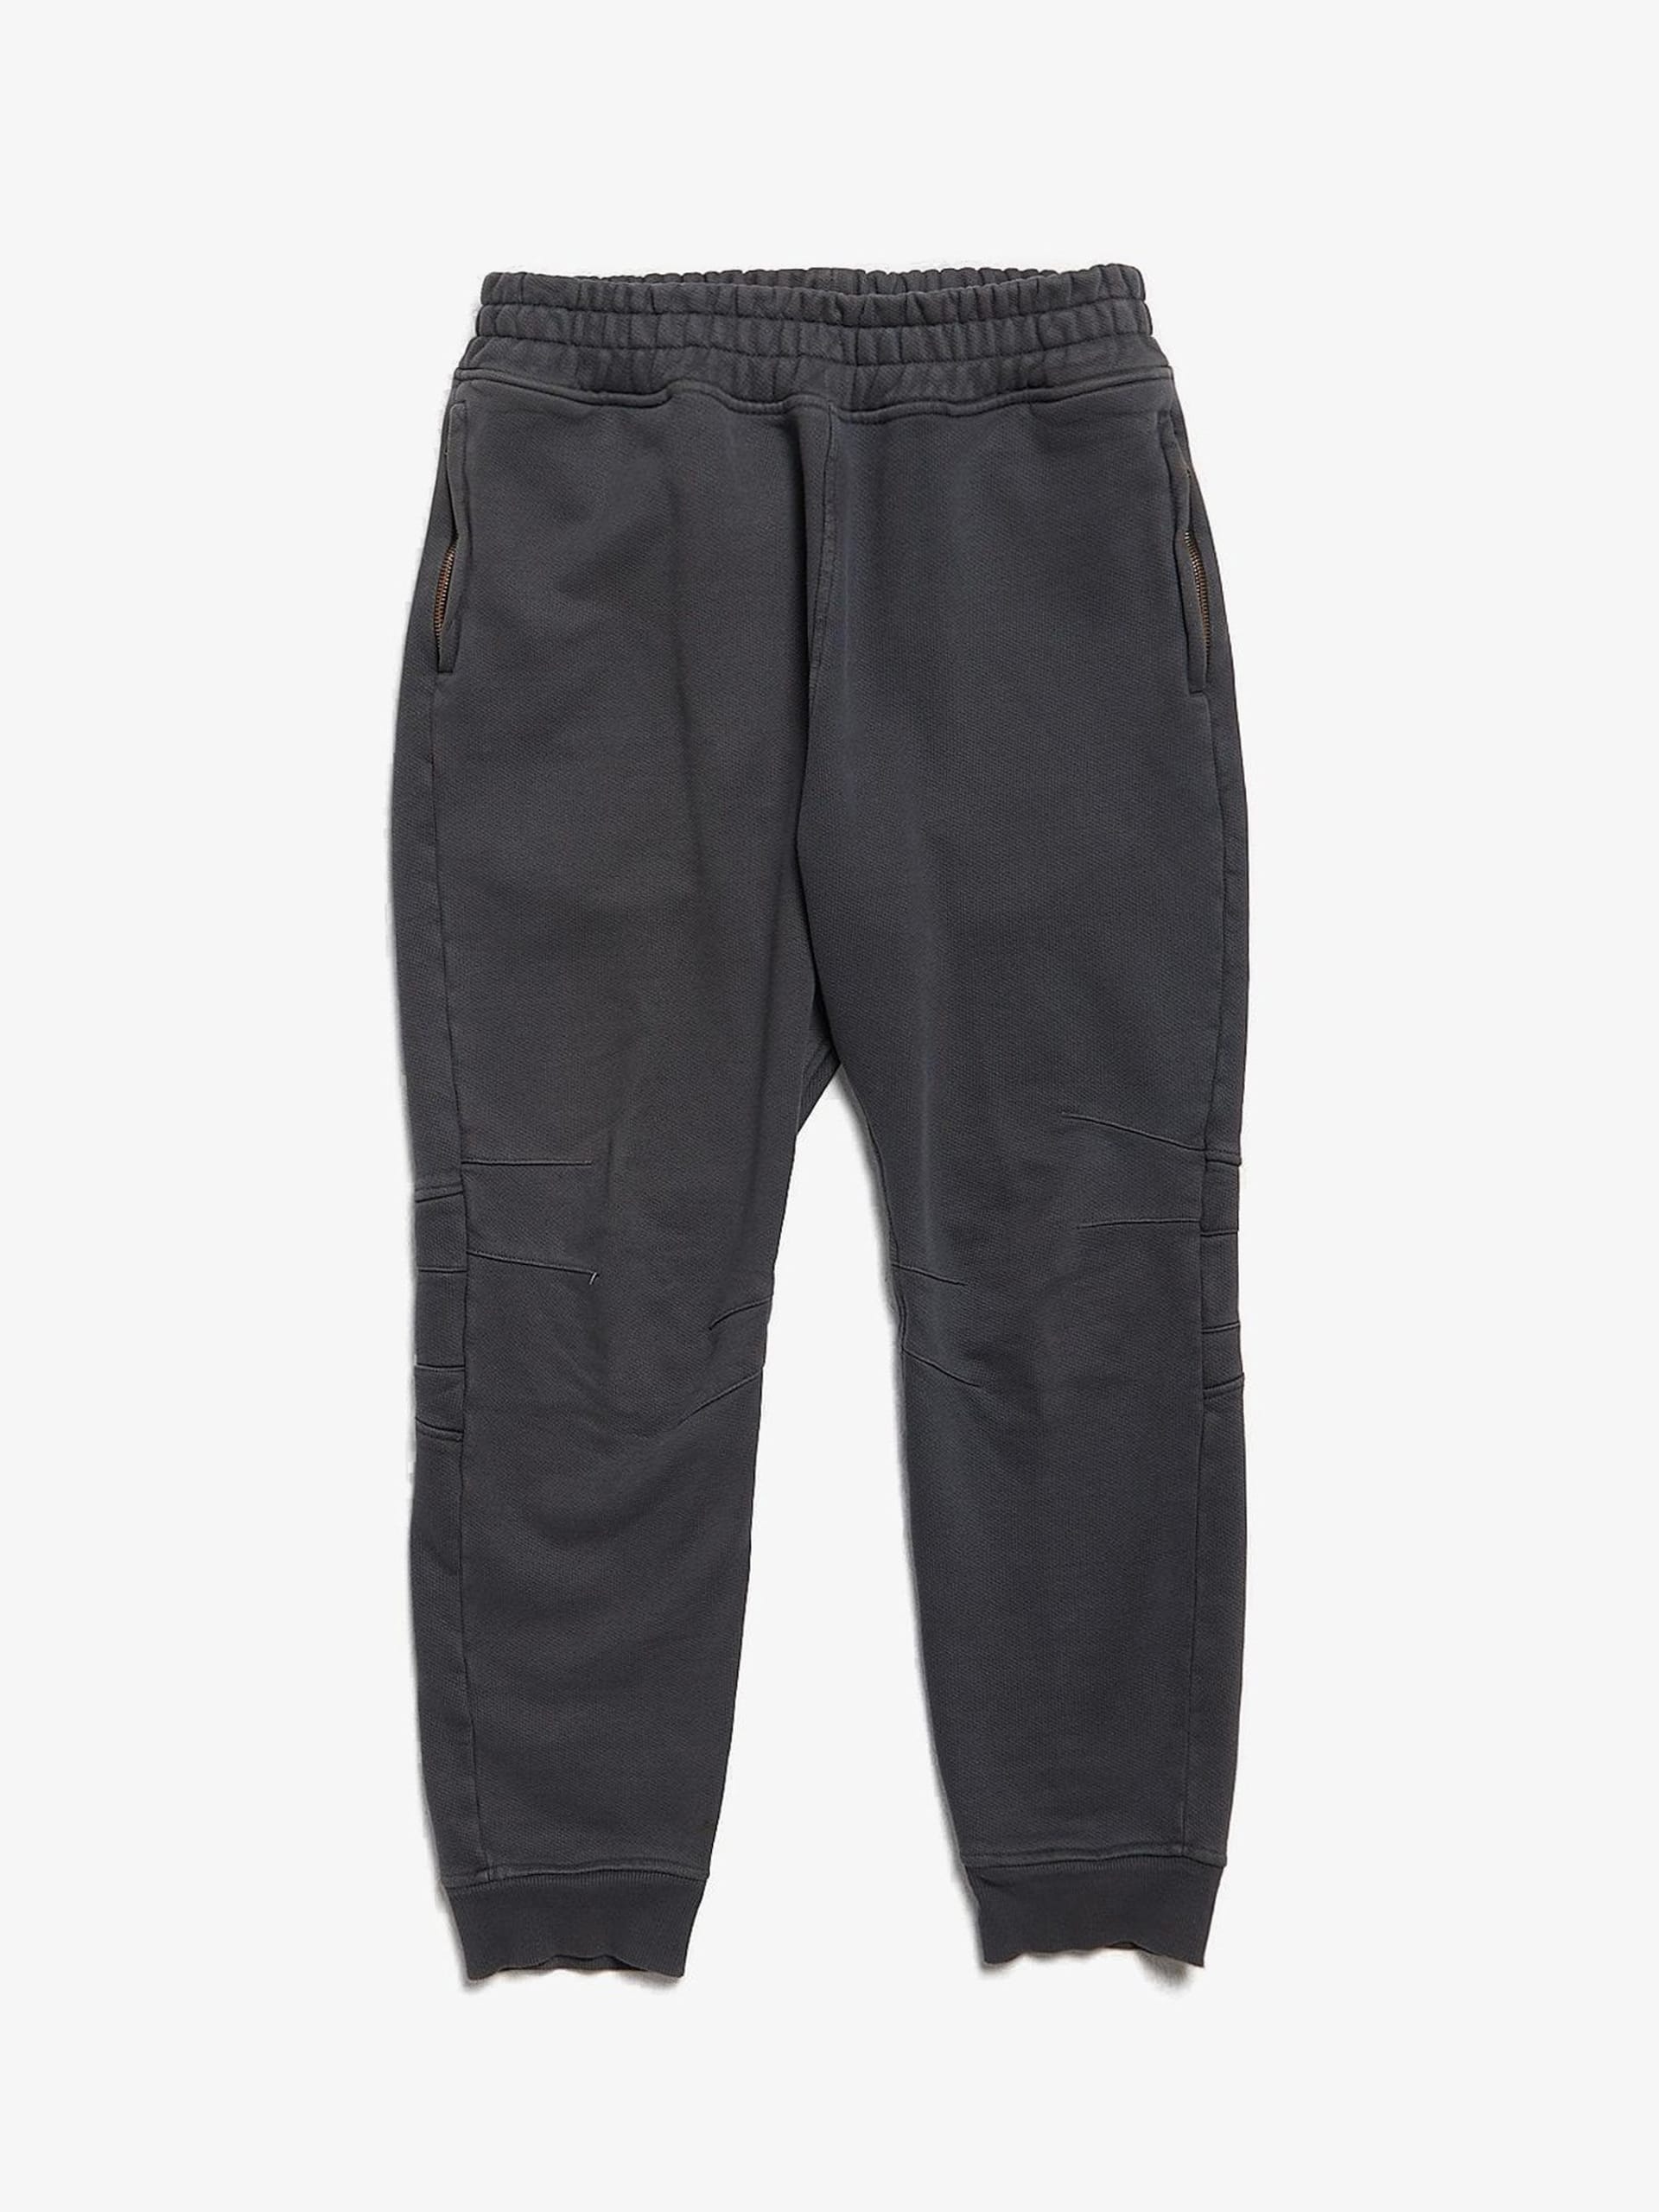 Yeezy Season 1 Gray Zipped Pocket Detailed Cotton Sweatpants